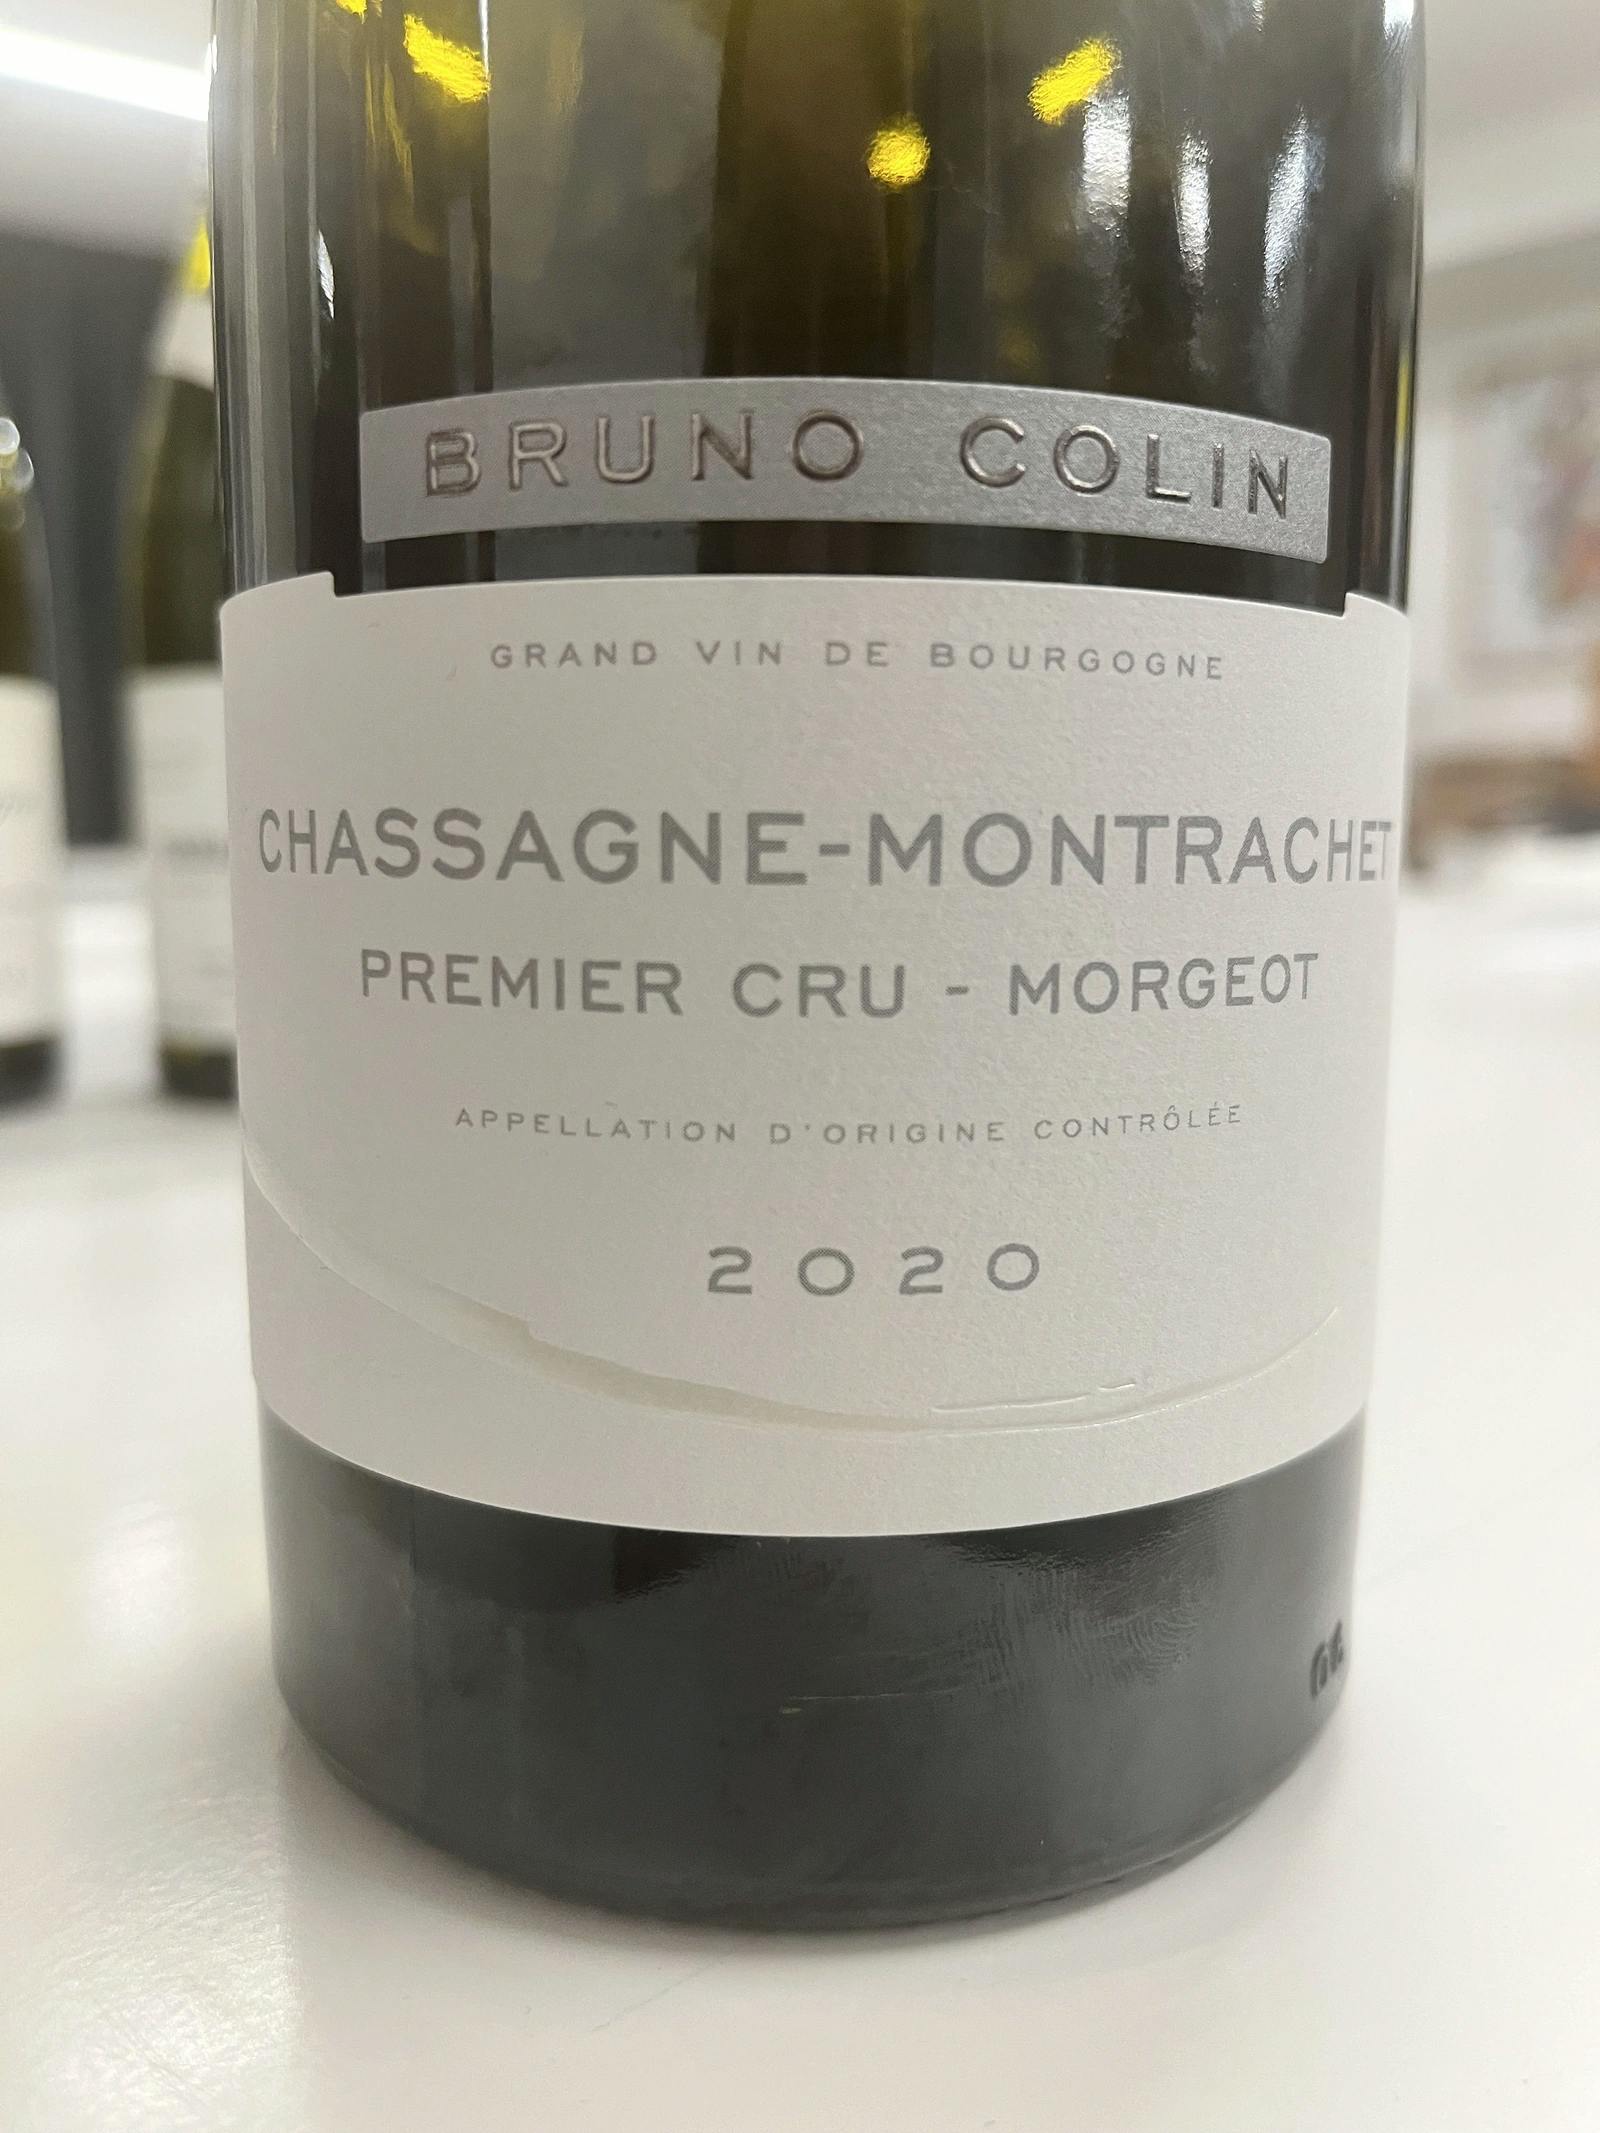 Bruno Colin Chassagne-Montrachet 1er Cru Morgeot 2020